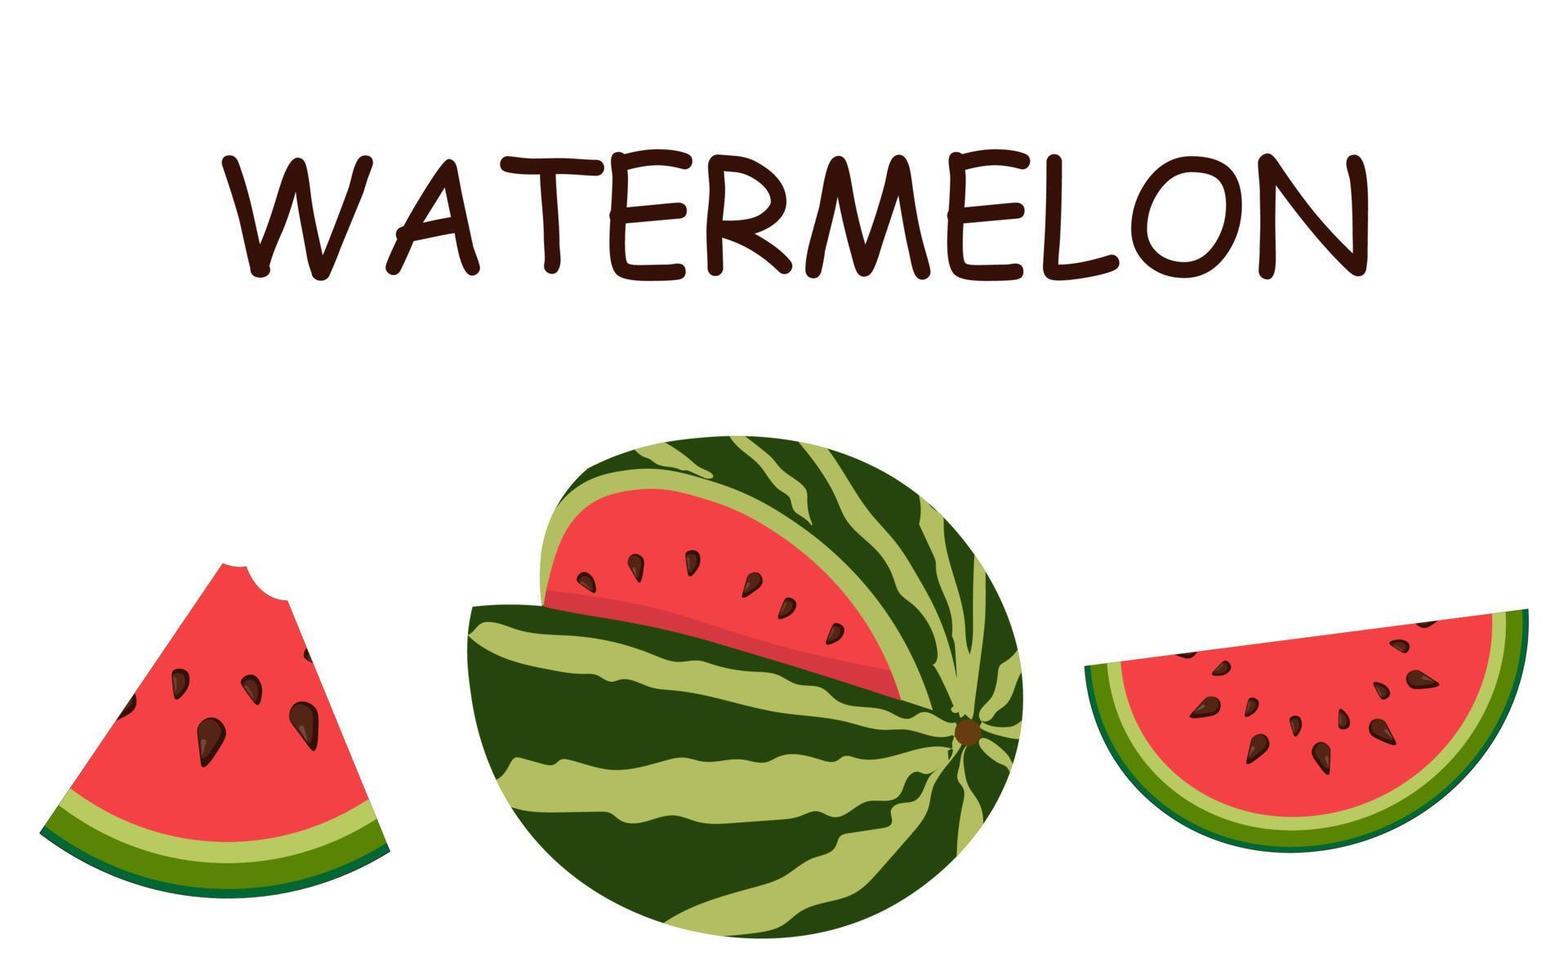 Set of vector illustrations of flat watermelon. Whole watermelon, cut watermelon, watermelon slices